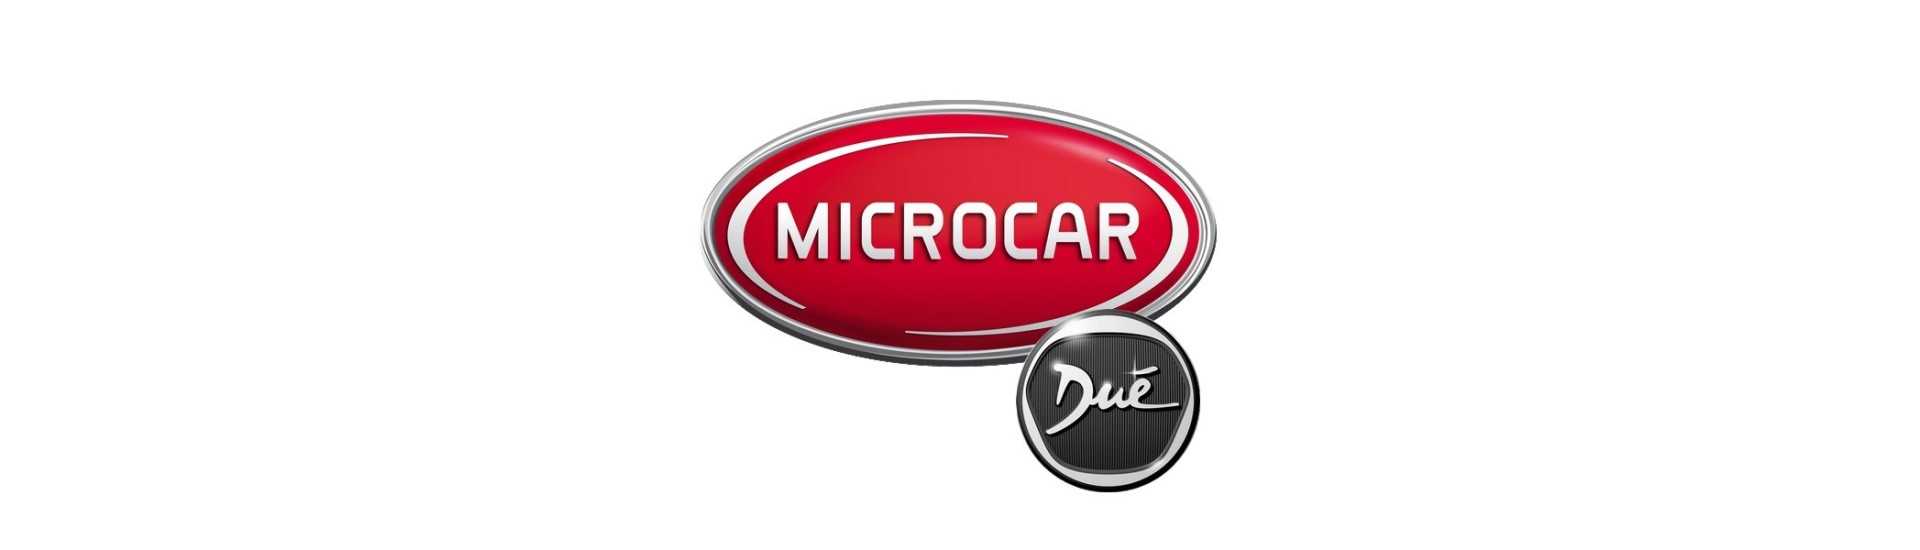 Käsijarrutus paras hinta auto ilman lupaa Microcar Dué